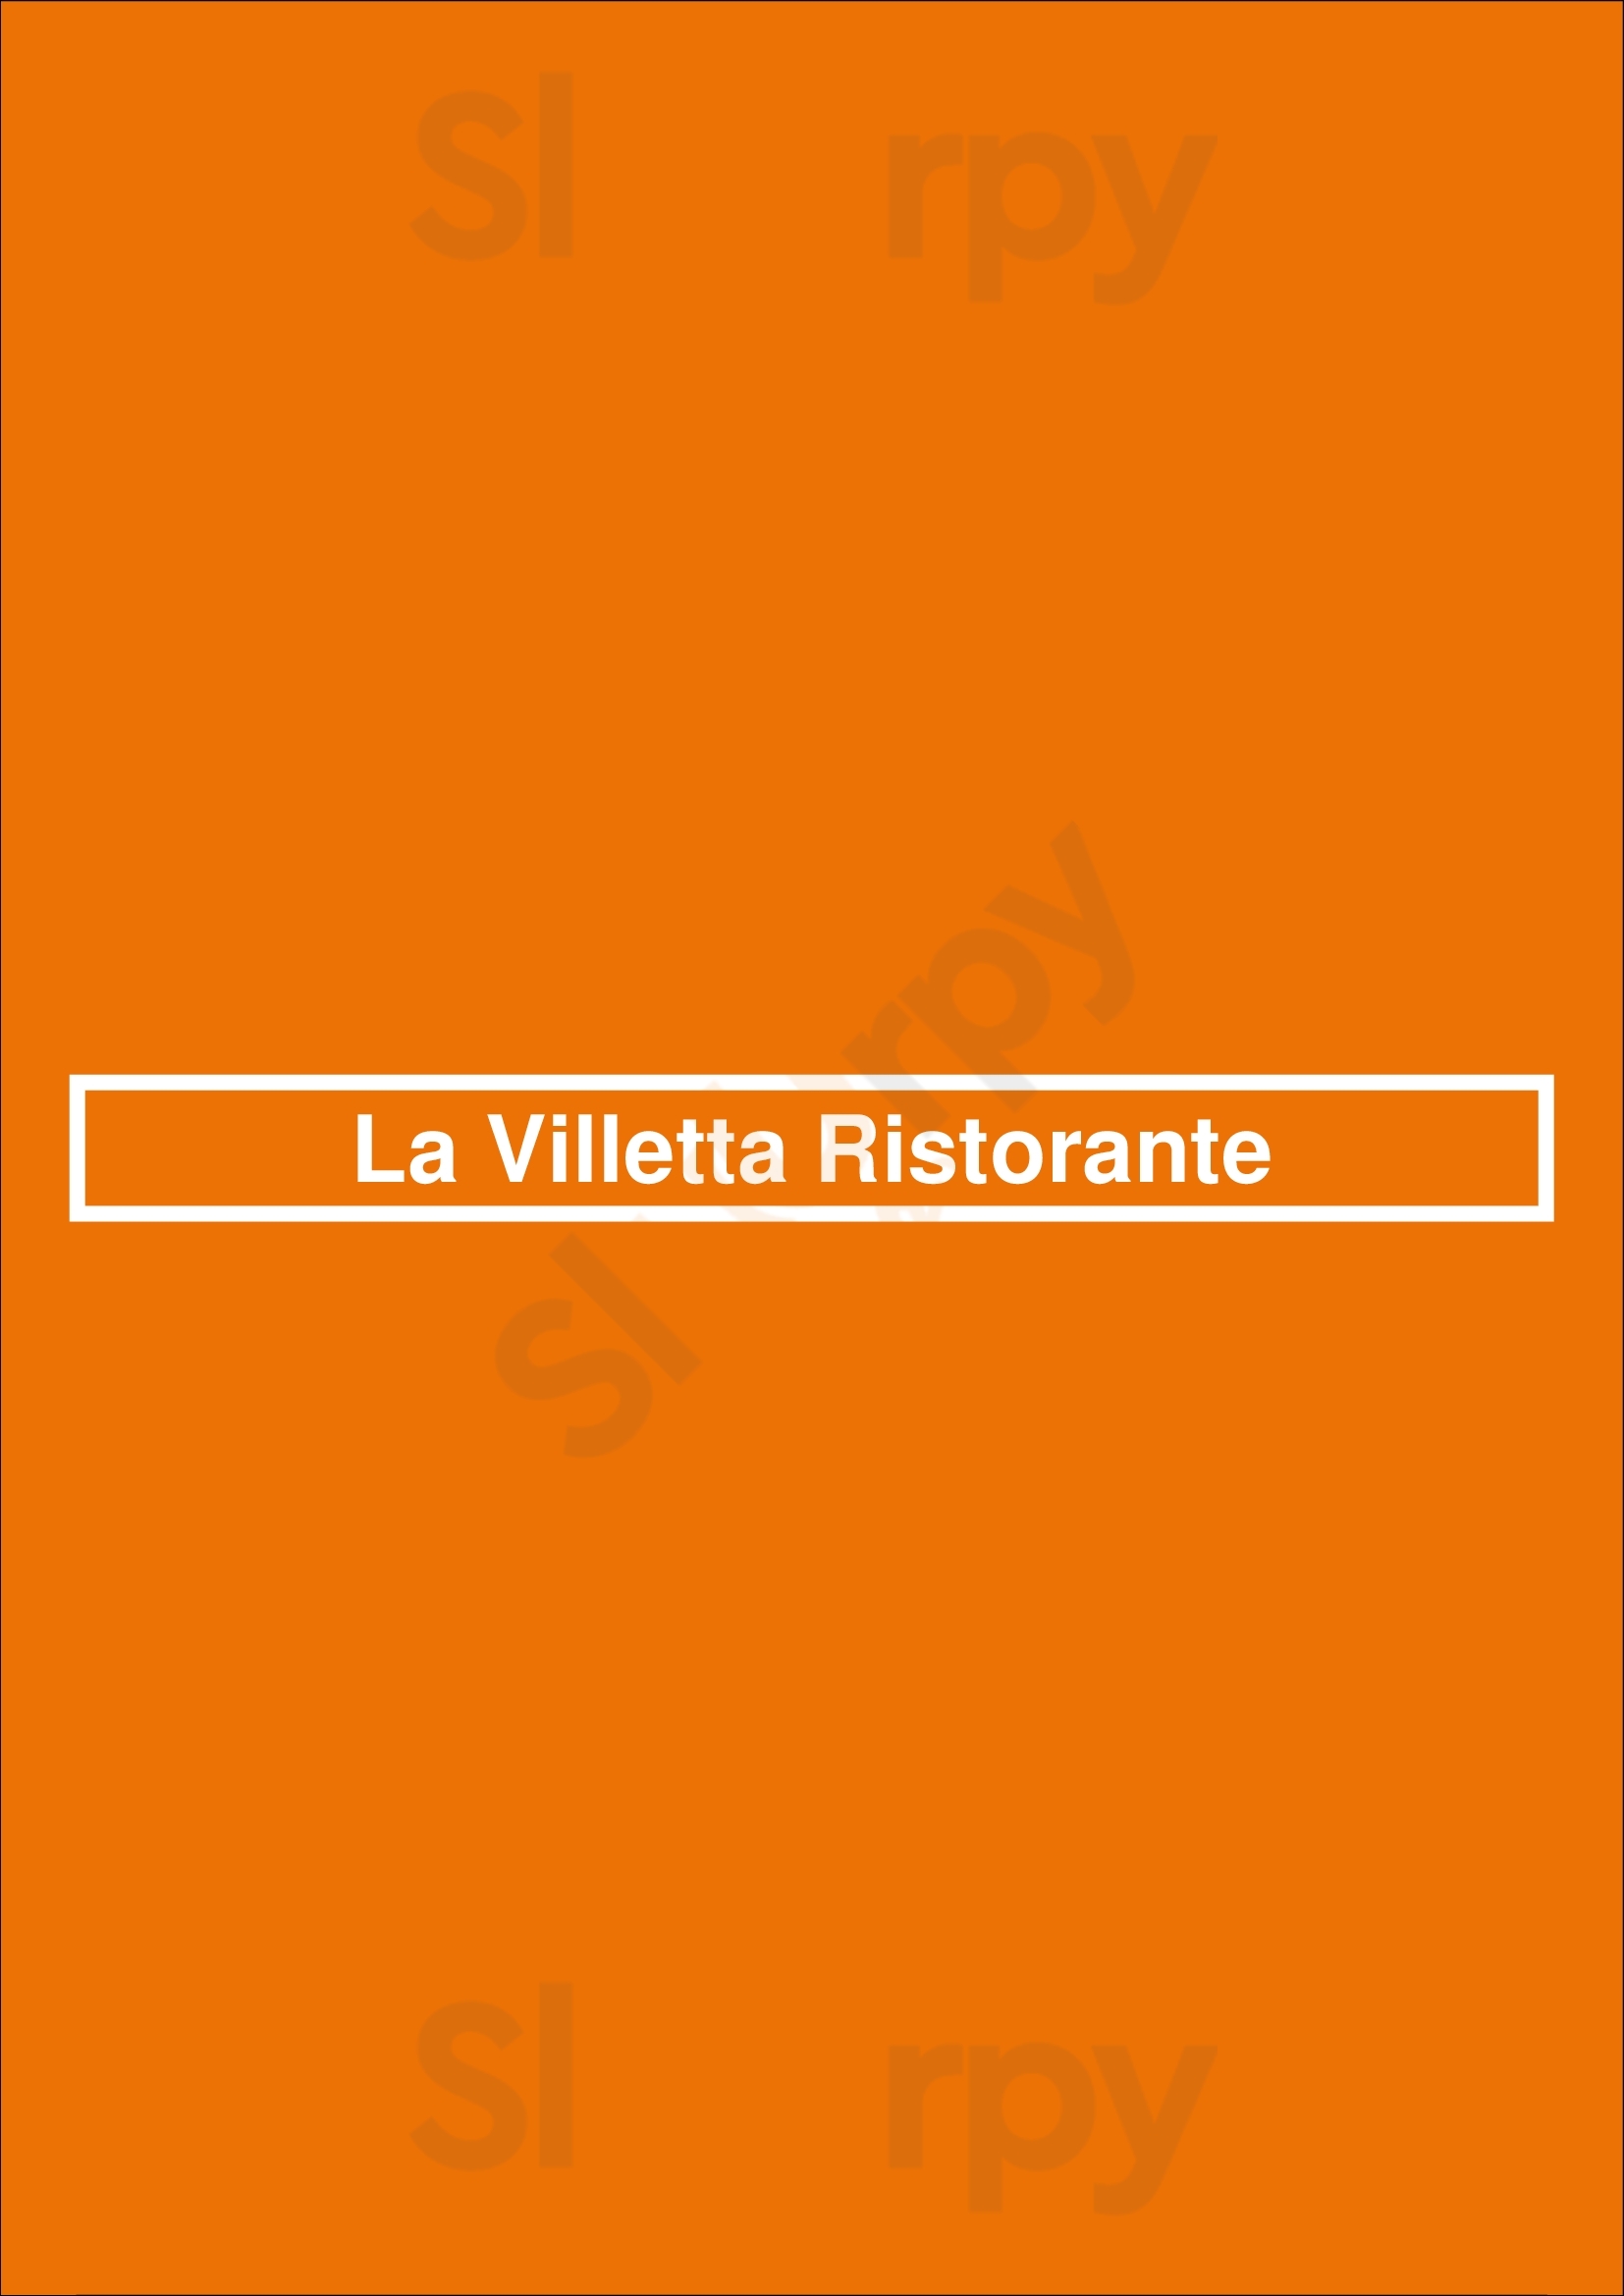 La Villetta Ristorante Burnaby Menu - 1